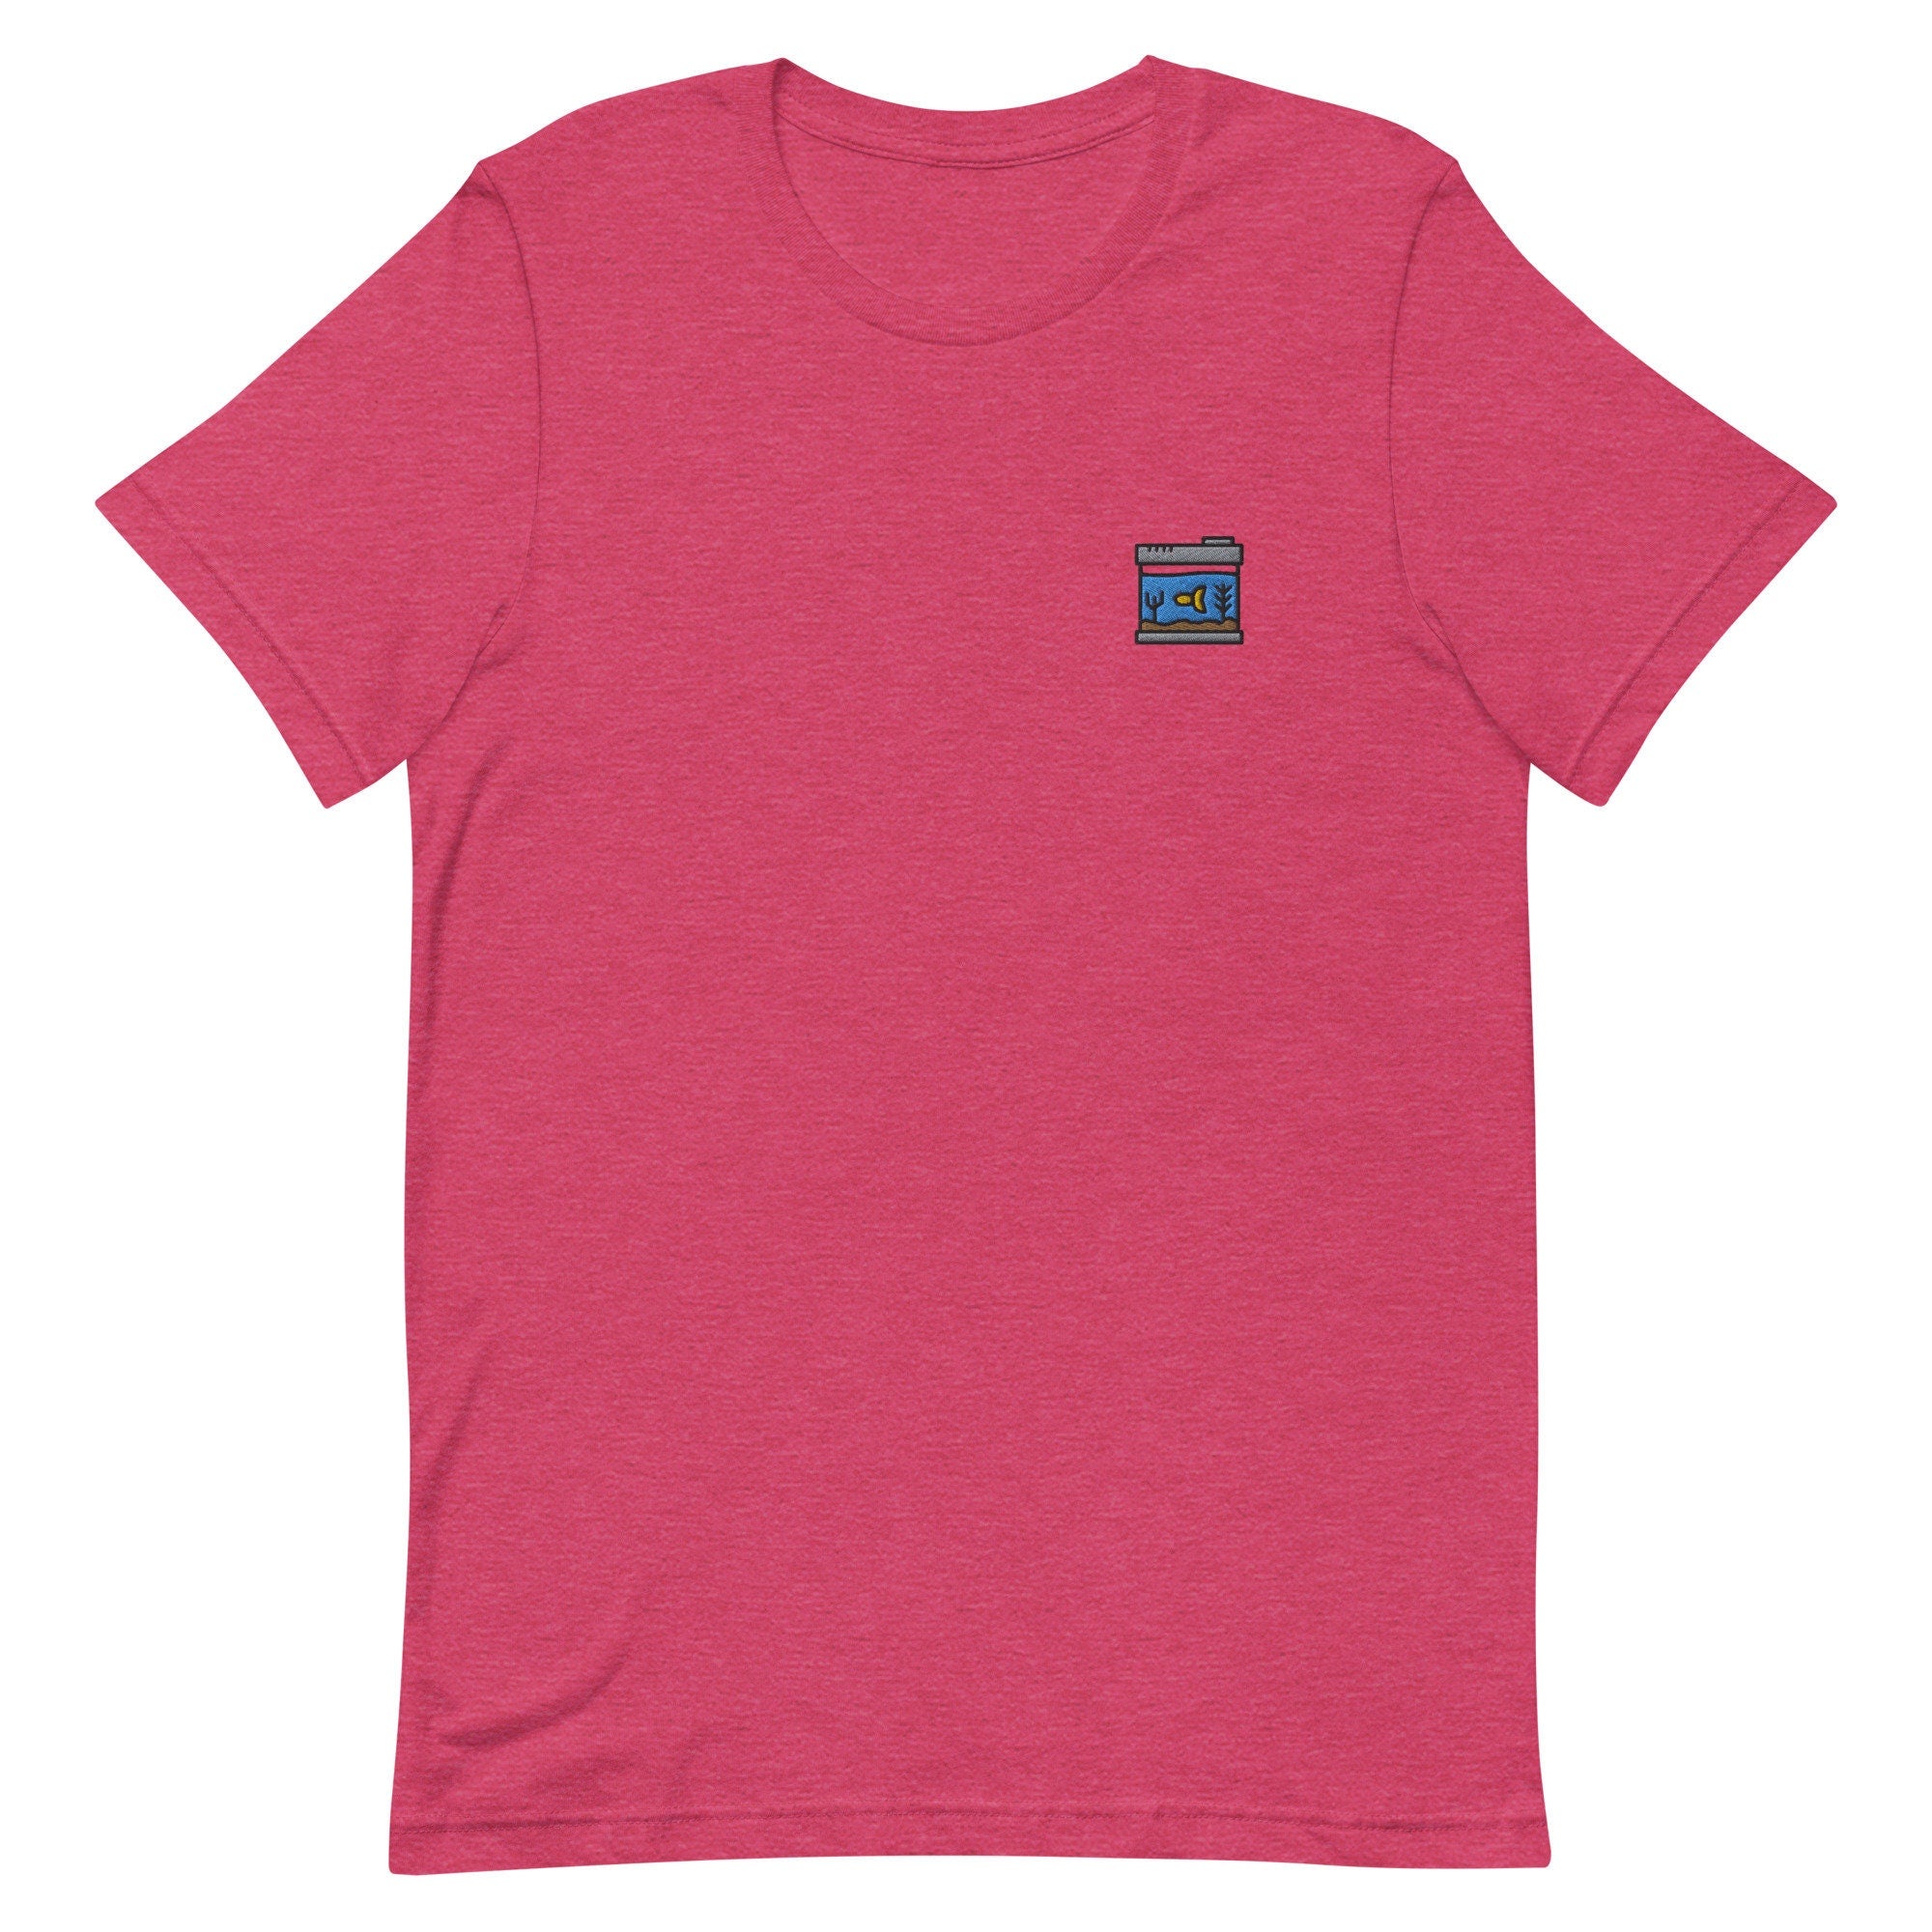 Aquarium Premium Men's T-Shirt, Embroidered Men's T-Shirt Gift for Boyfriend, Men's Short Sleeve Shirt - Multiple Colors